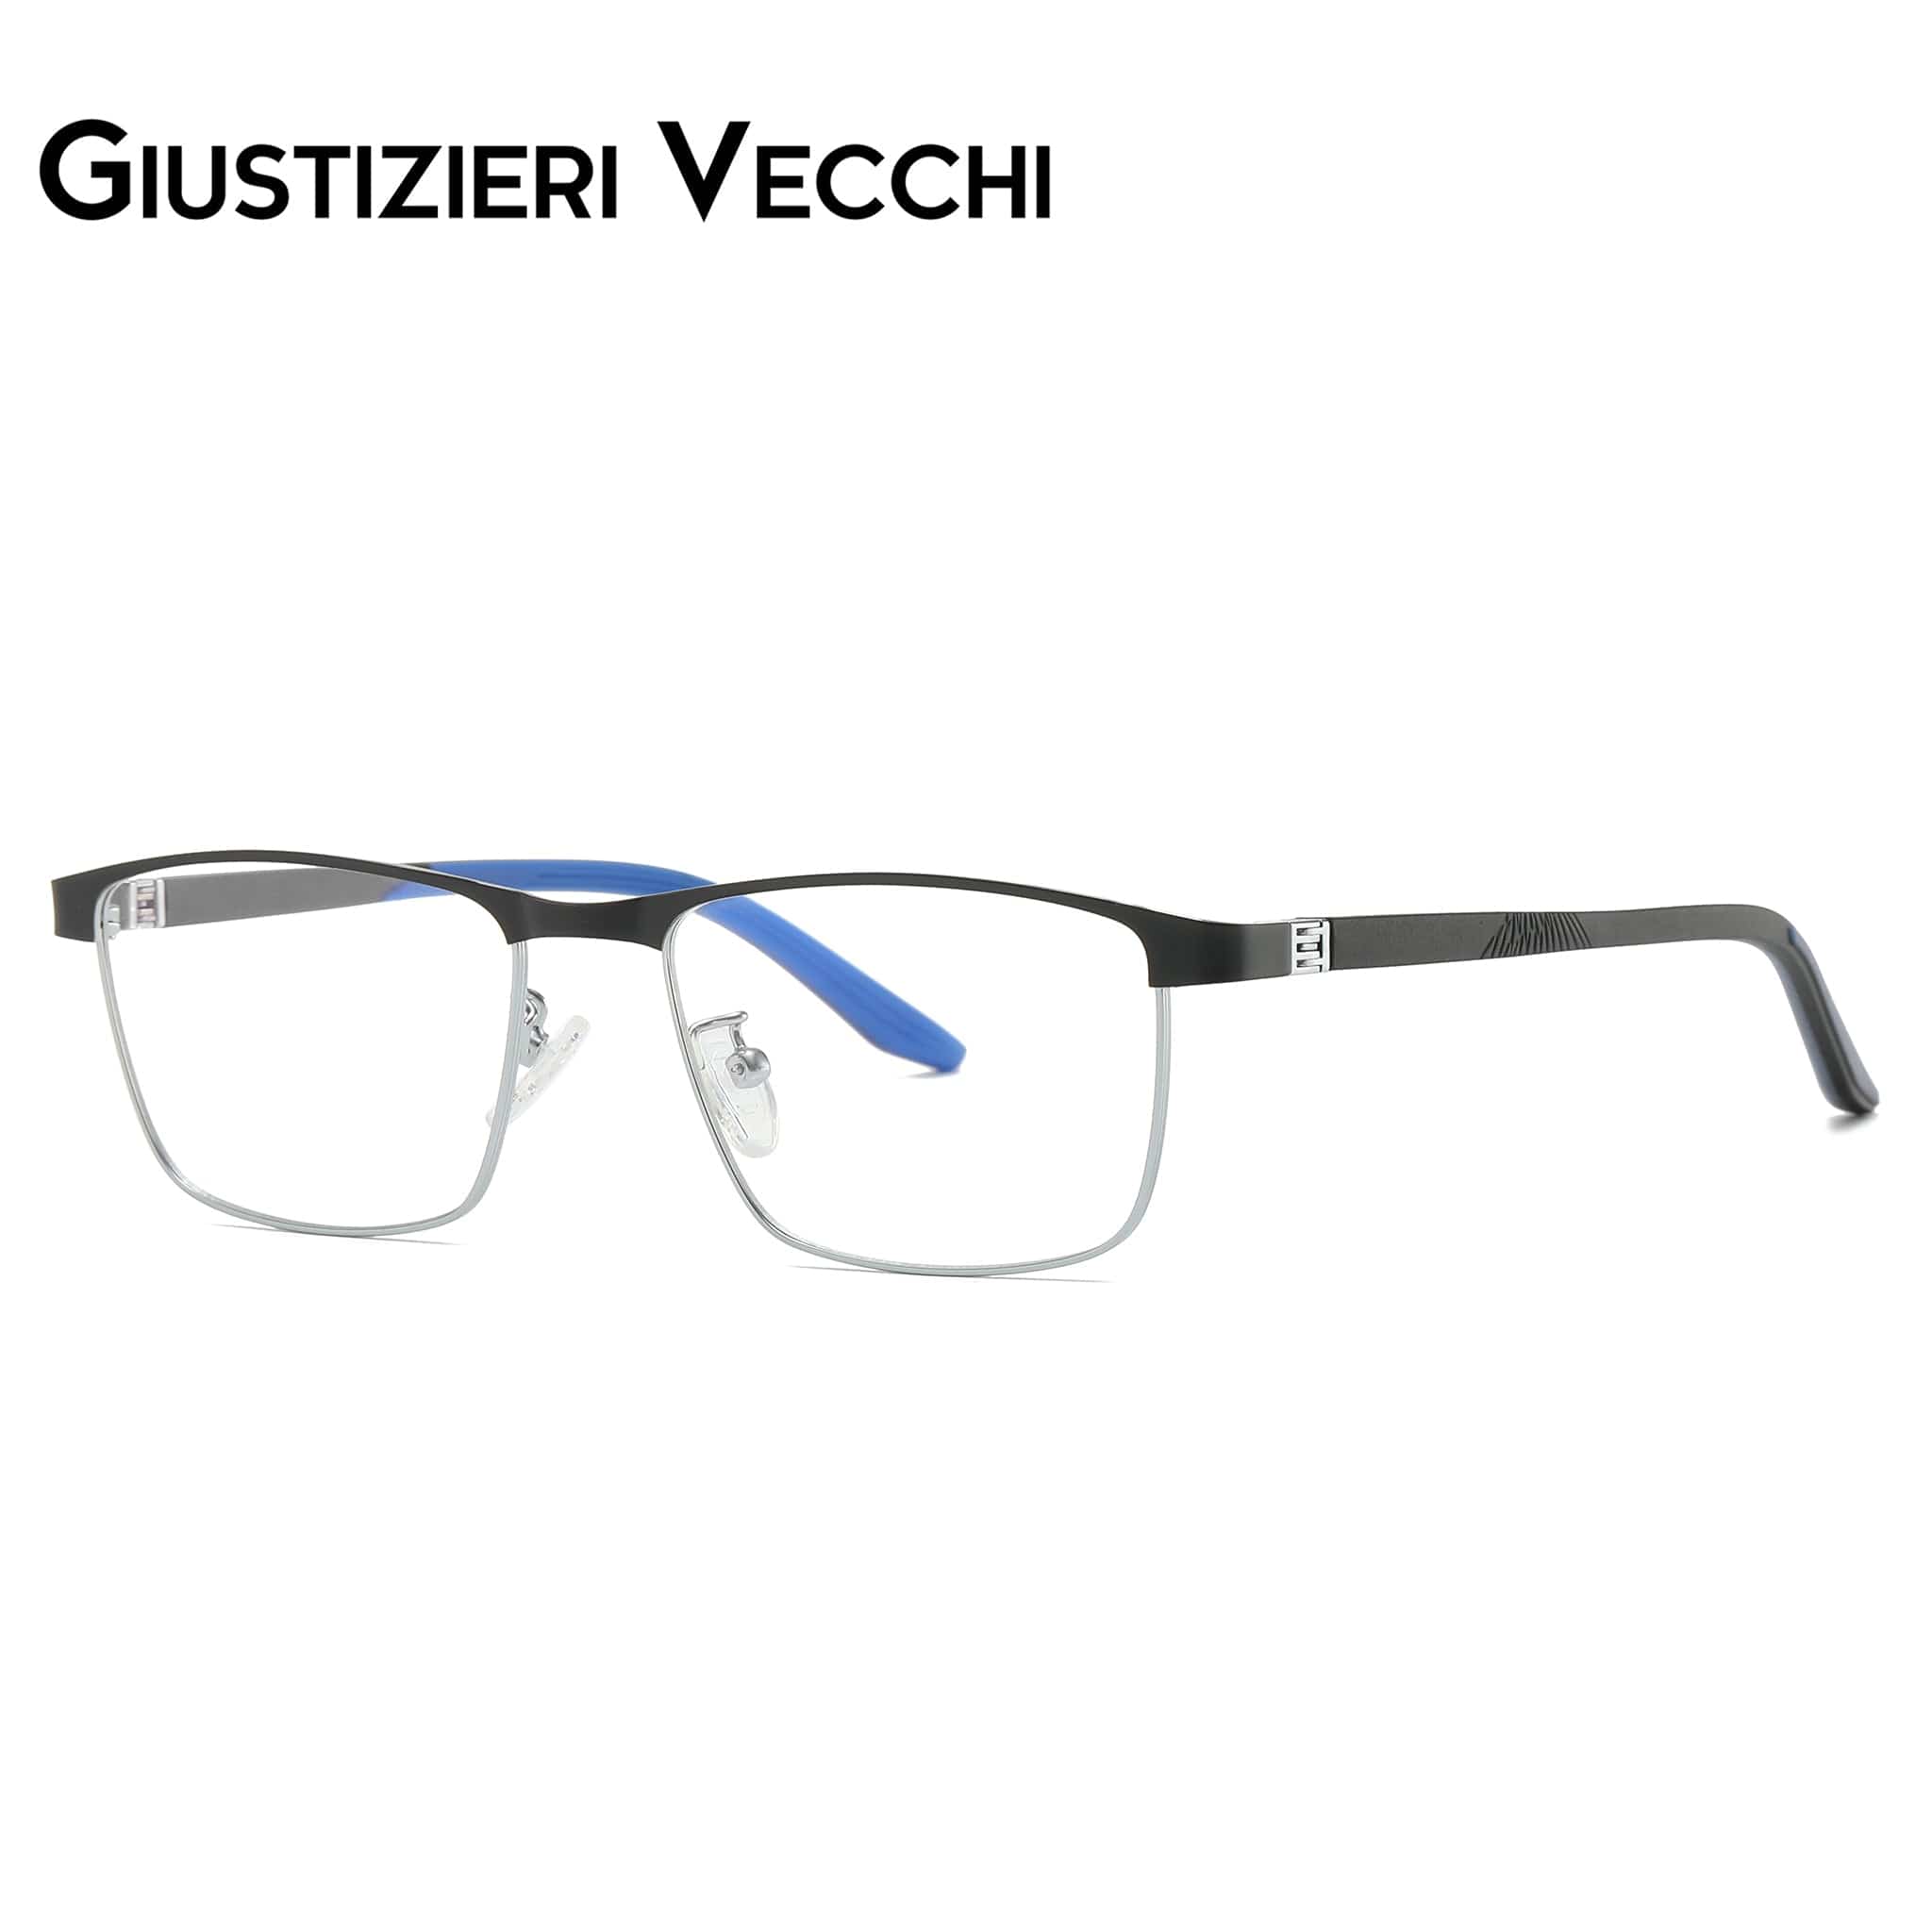 GIUSTIZIERI VECCHI Eyeglasses Summer Breeze Duo